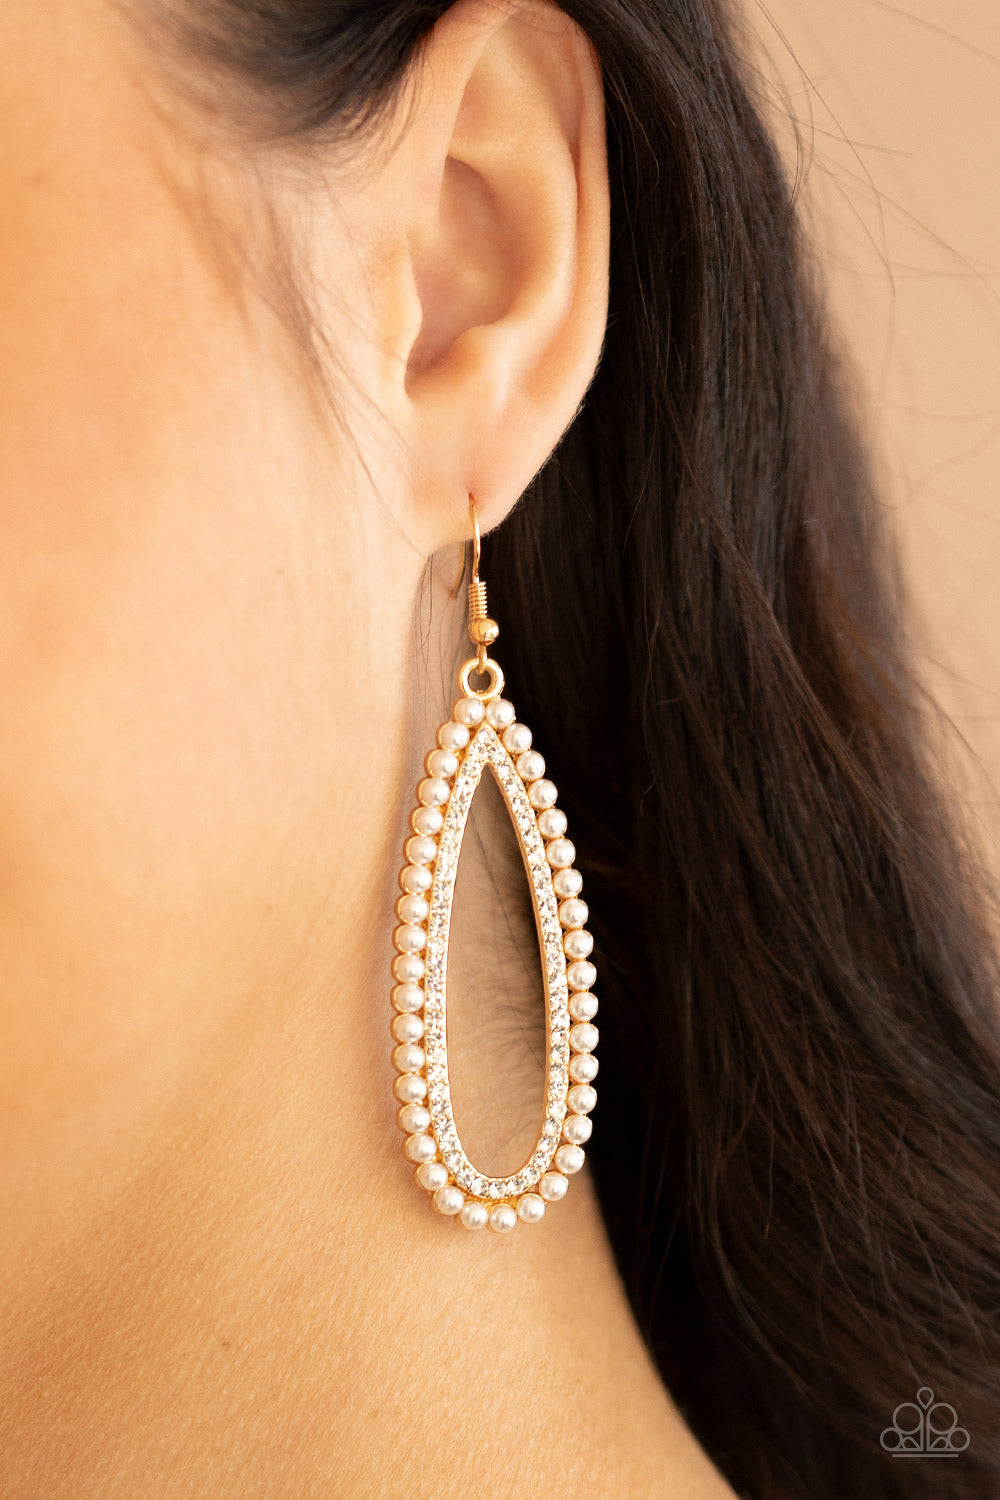 Glamorously Glowing - Gold & White Pearl Earrings - Princess Glam Shop